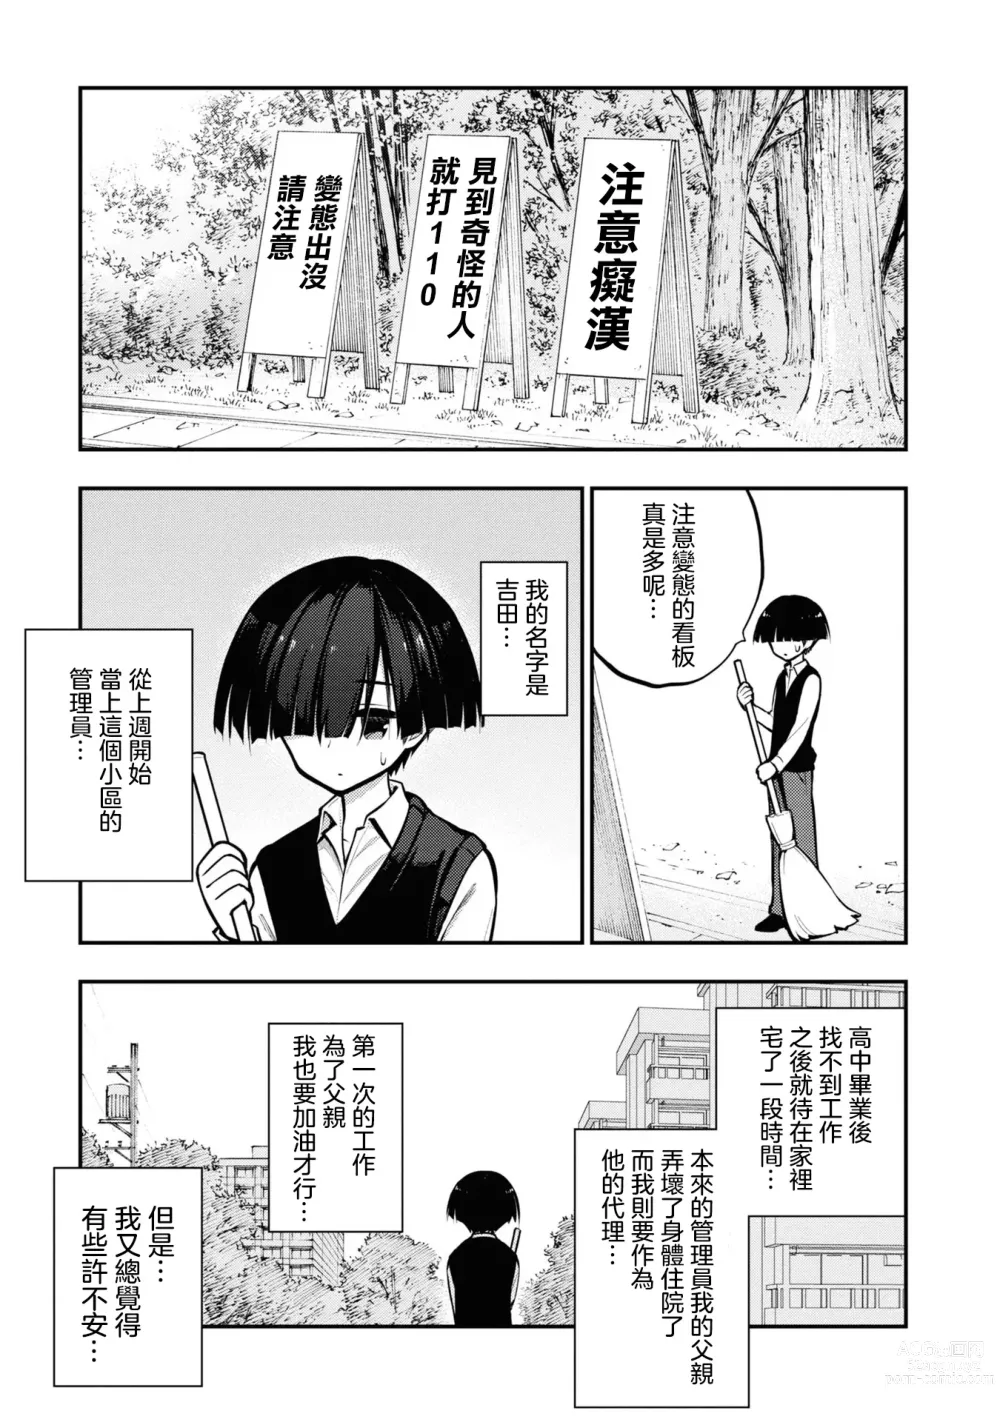 Page 6 of manga 淫獄小區 VOL.1